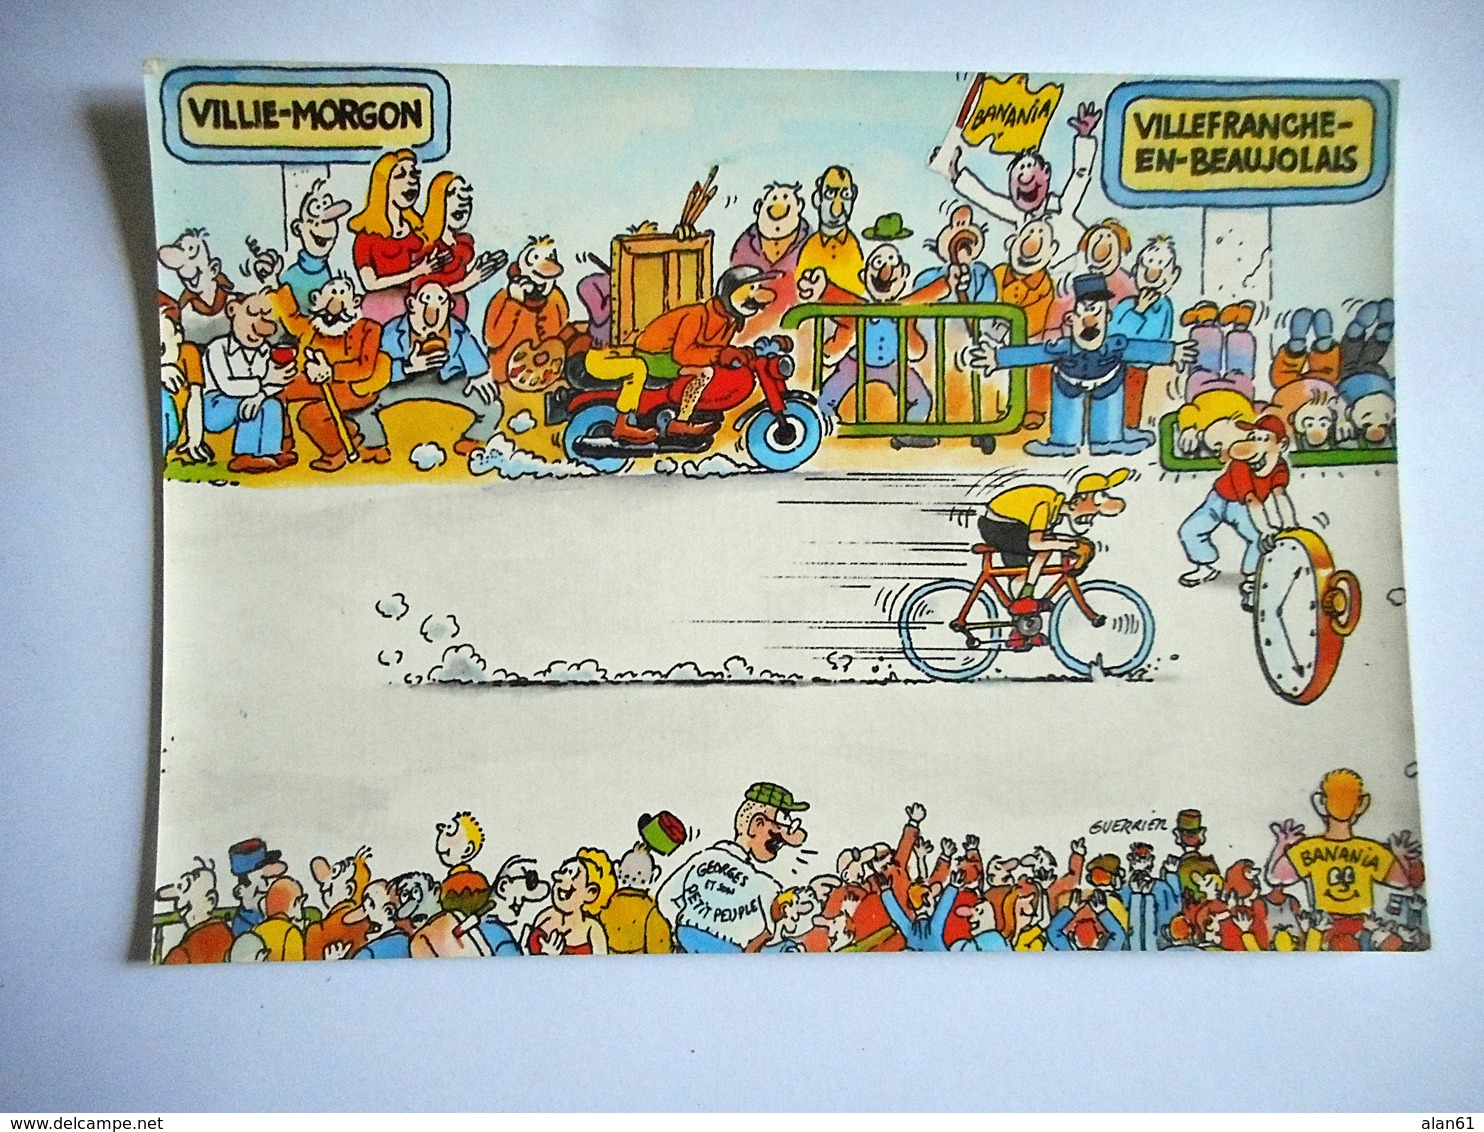 CPM TOUR DE FRANCE 1984 22 EME ETAPE VILLIE MORGON VILLEFRANCHE EN BEAUJOLAIS Pub BANANIA - Ciclismo